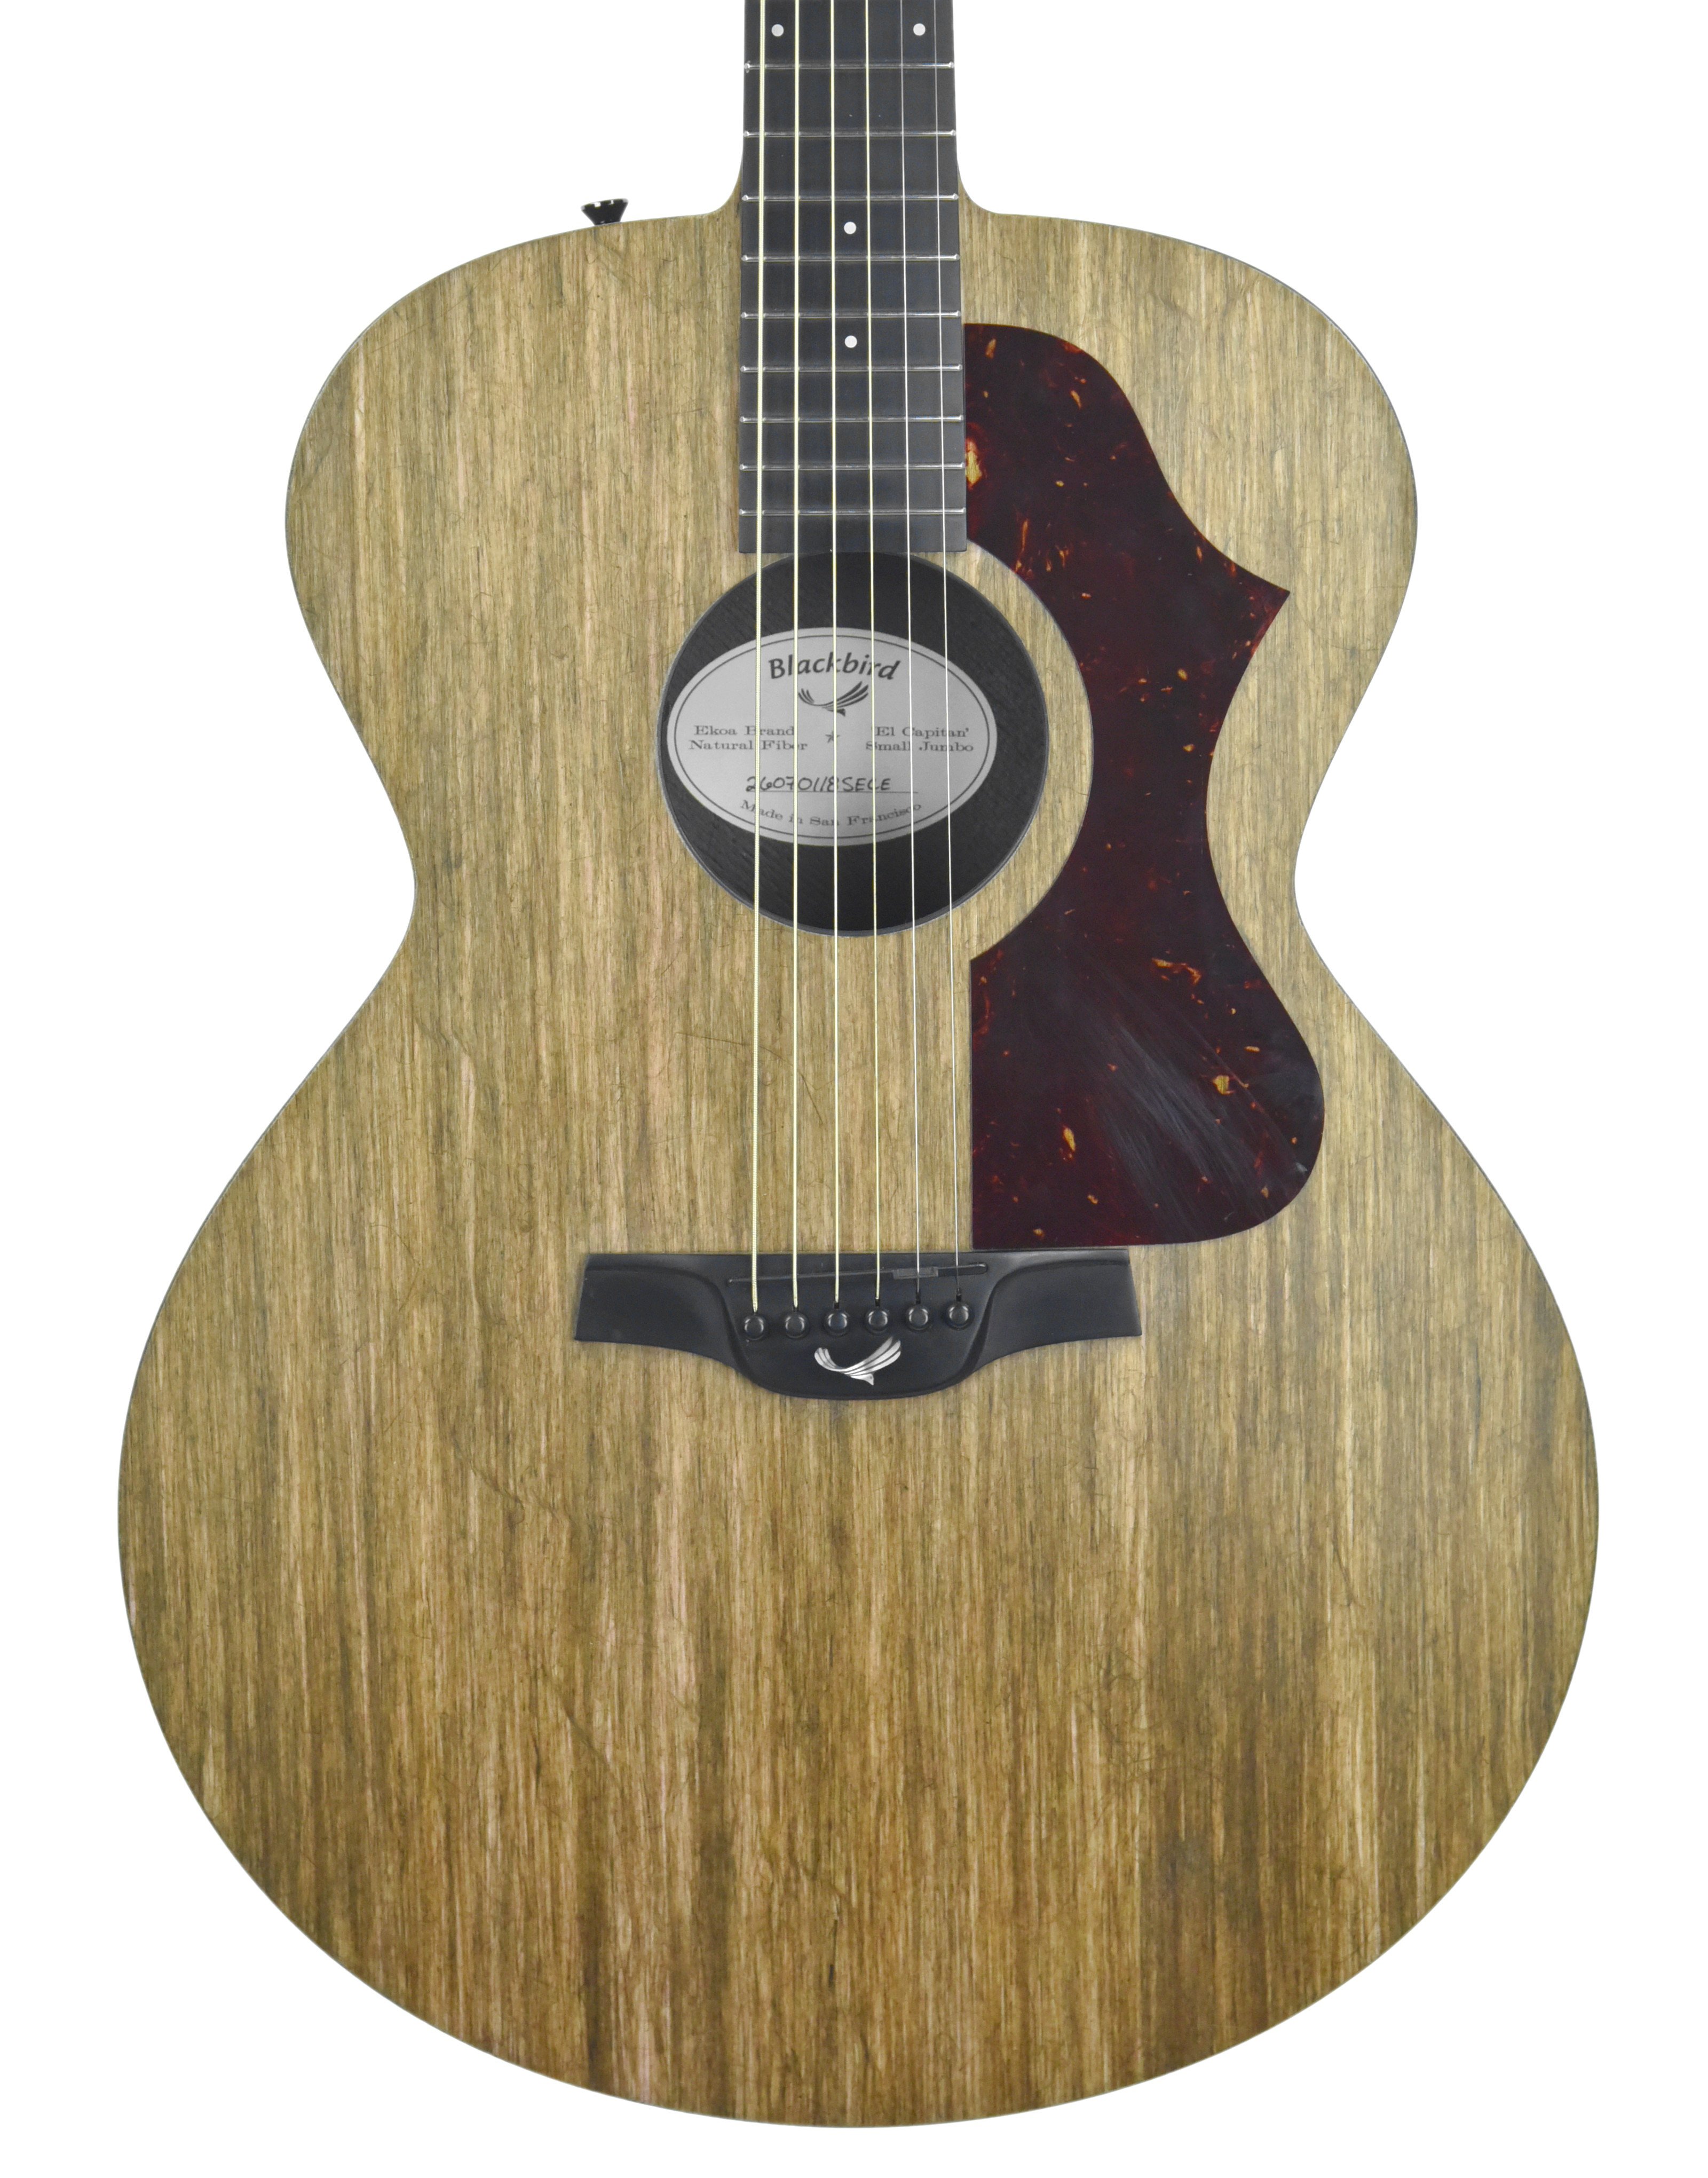 Blackbird el capitan guitar for sale by owner